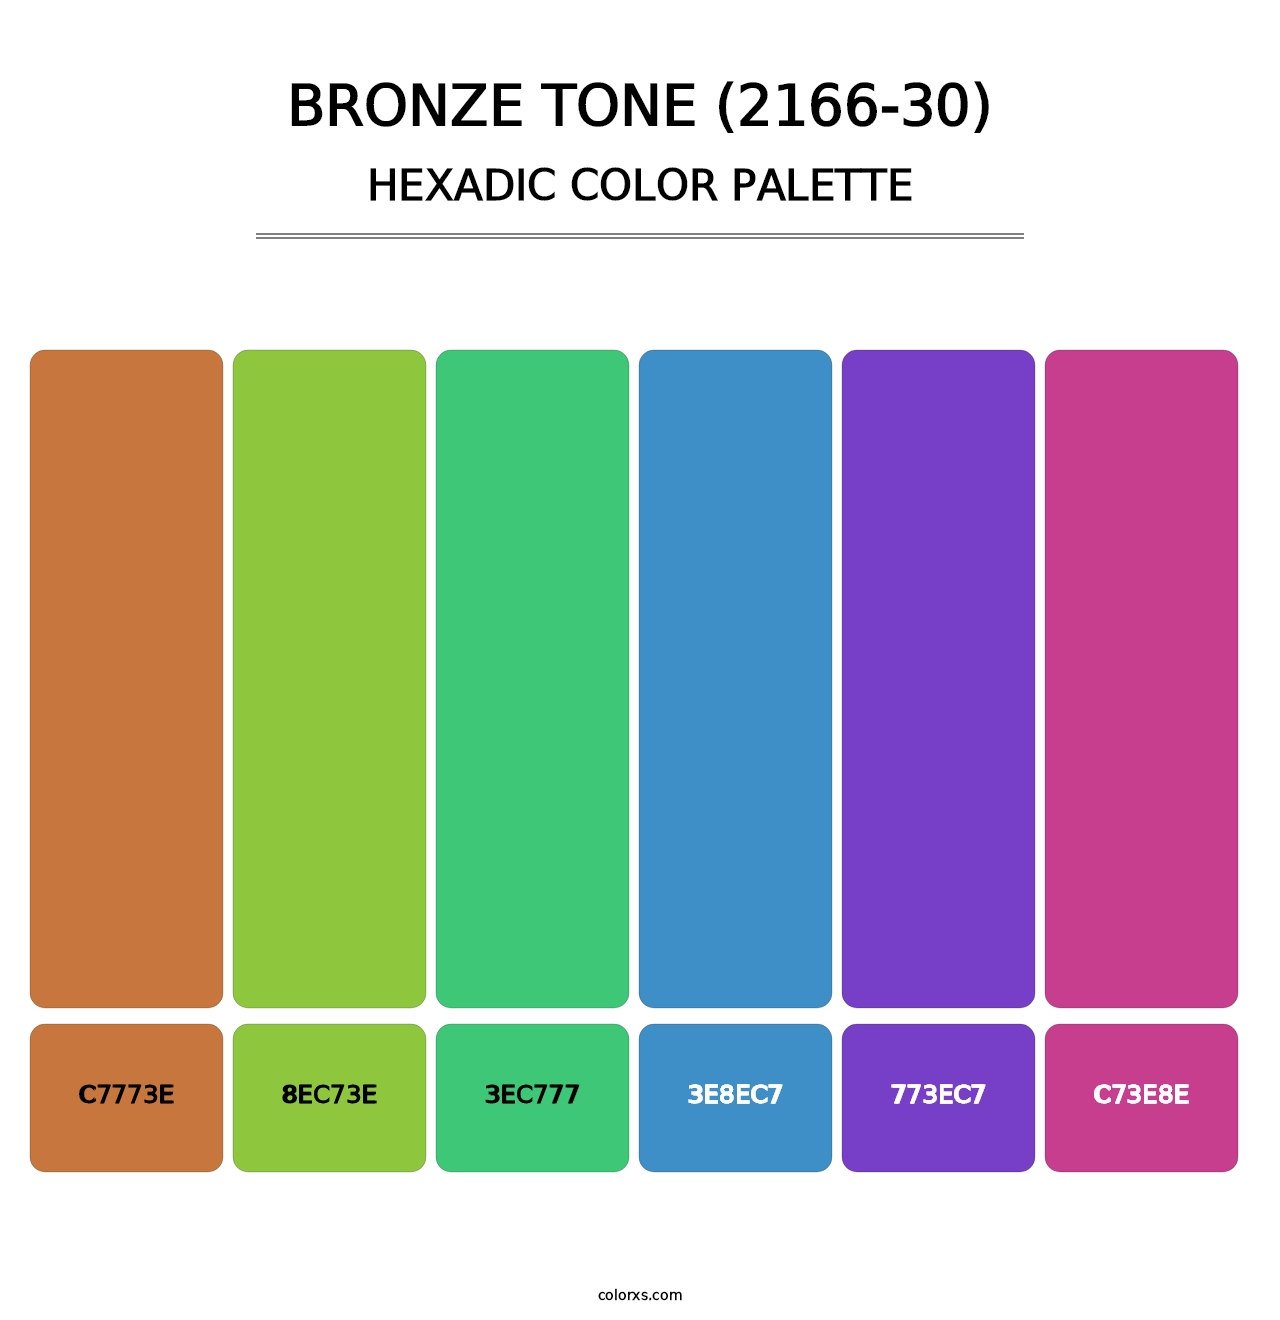 Bronze Tone (2166-30) - Hexadic Color Palette